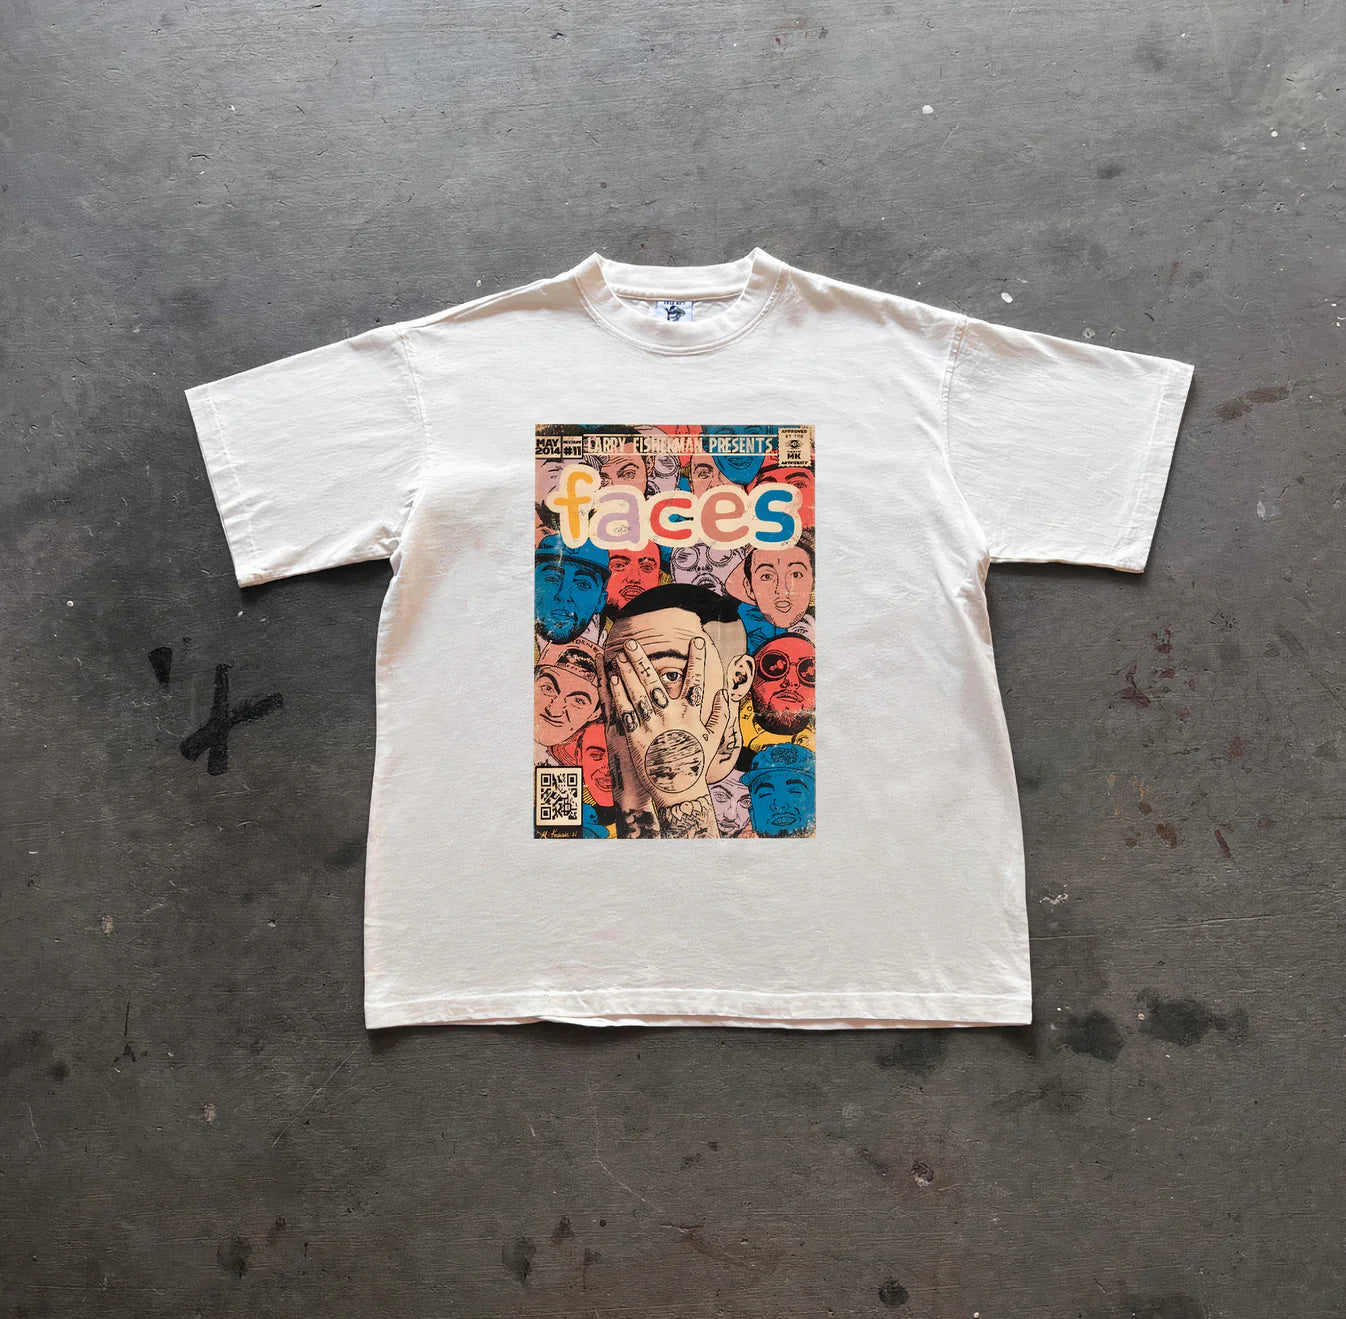 MAC MILLER "faces" Oversized T-shirt